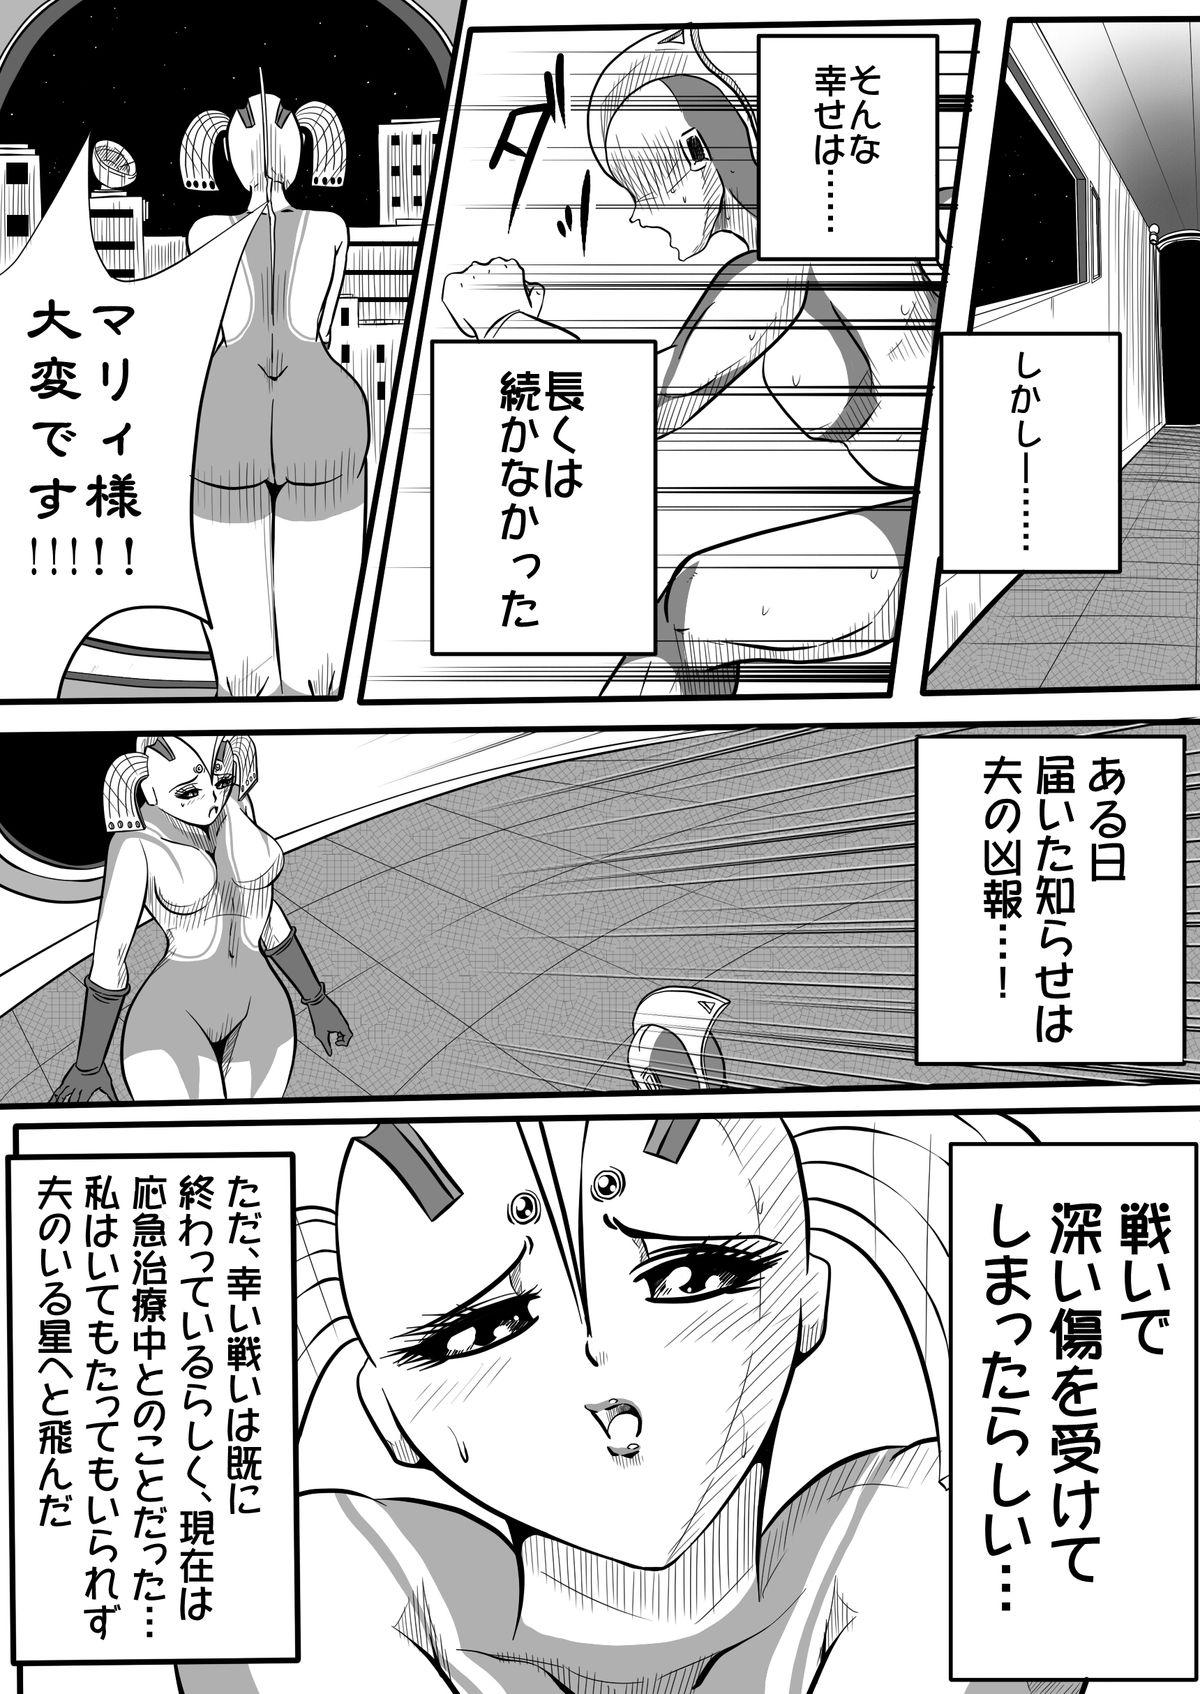 Nalgona Ultra Mairi Monogatari 2 - Shade no Erona Hon IV - Ultraman Husband - Page 7